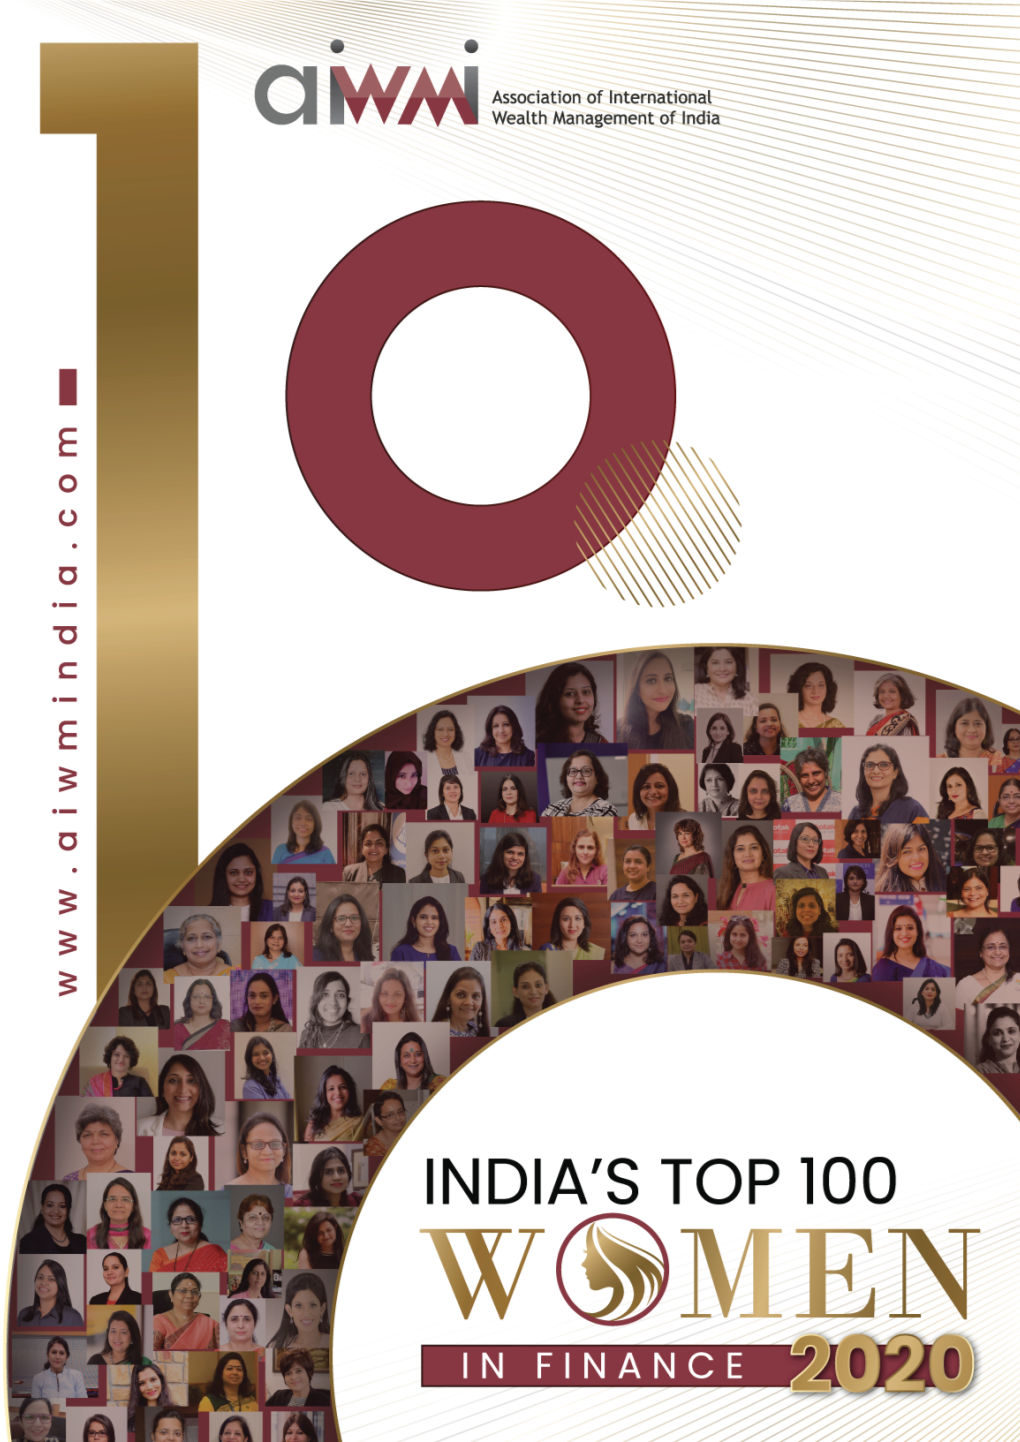 Top 100 Women in Finance in India